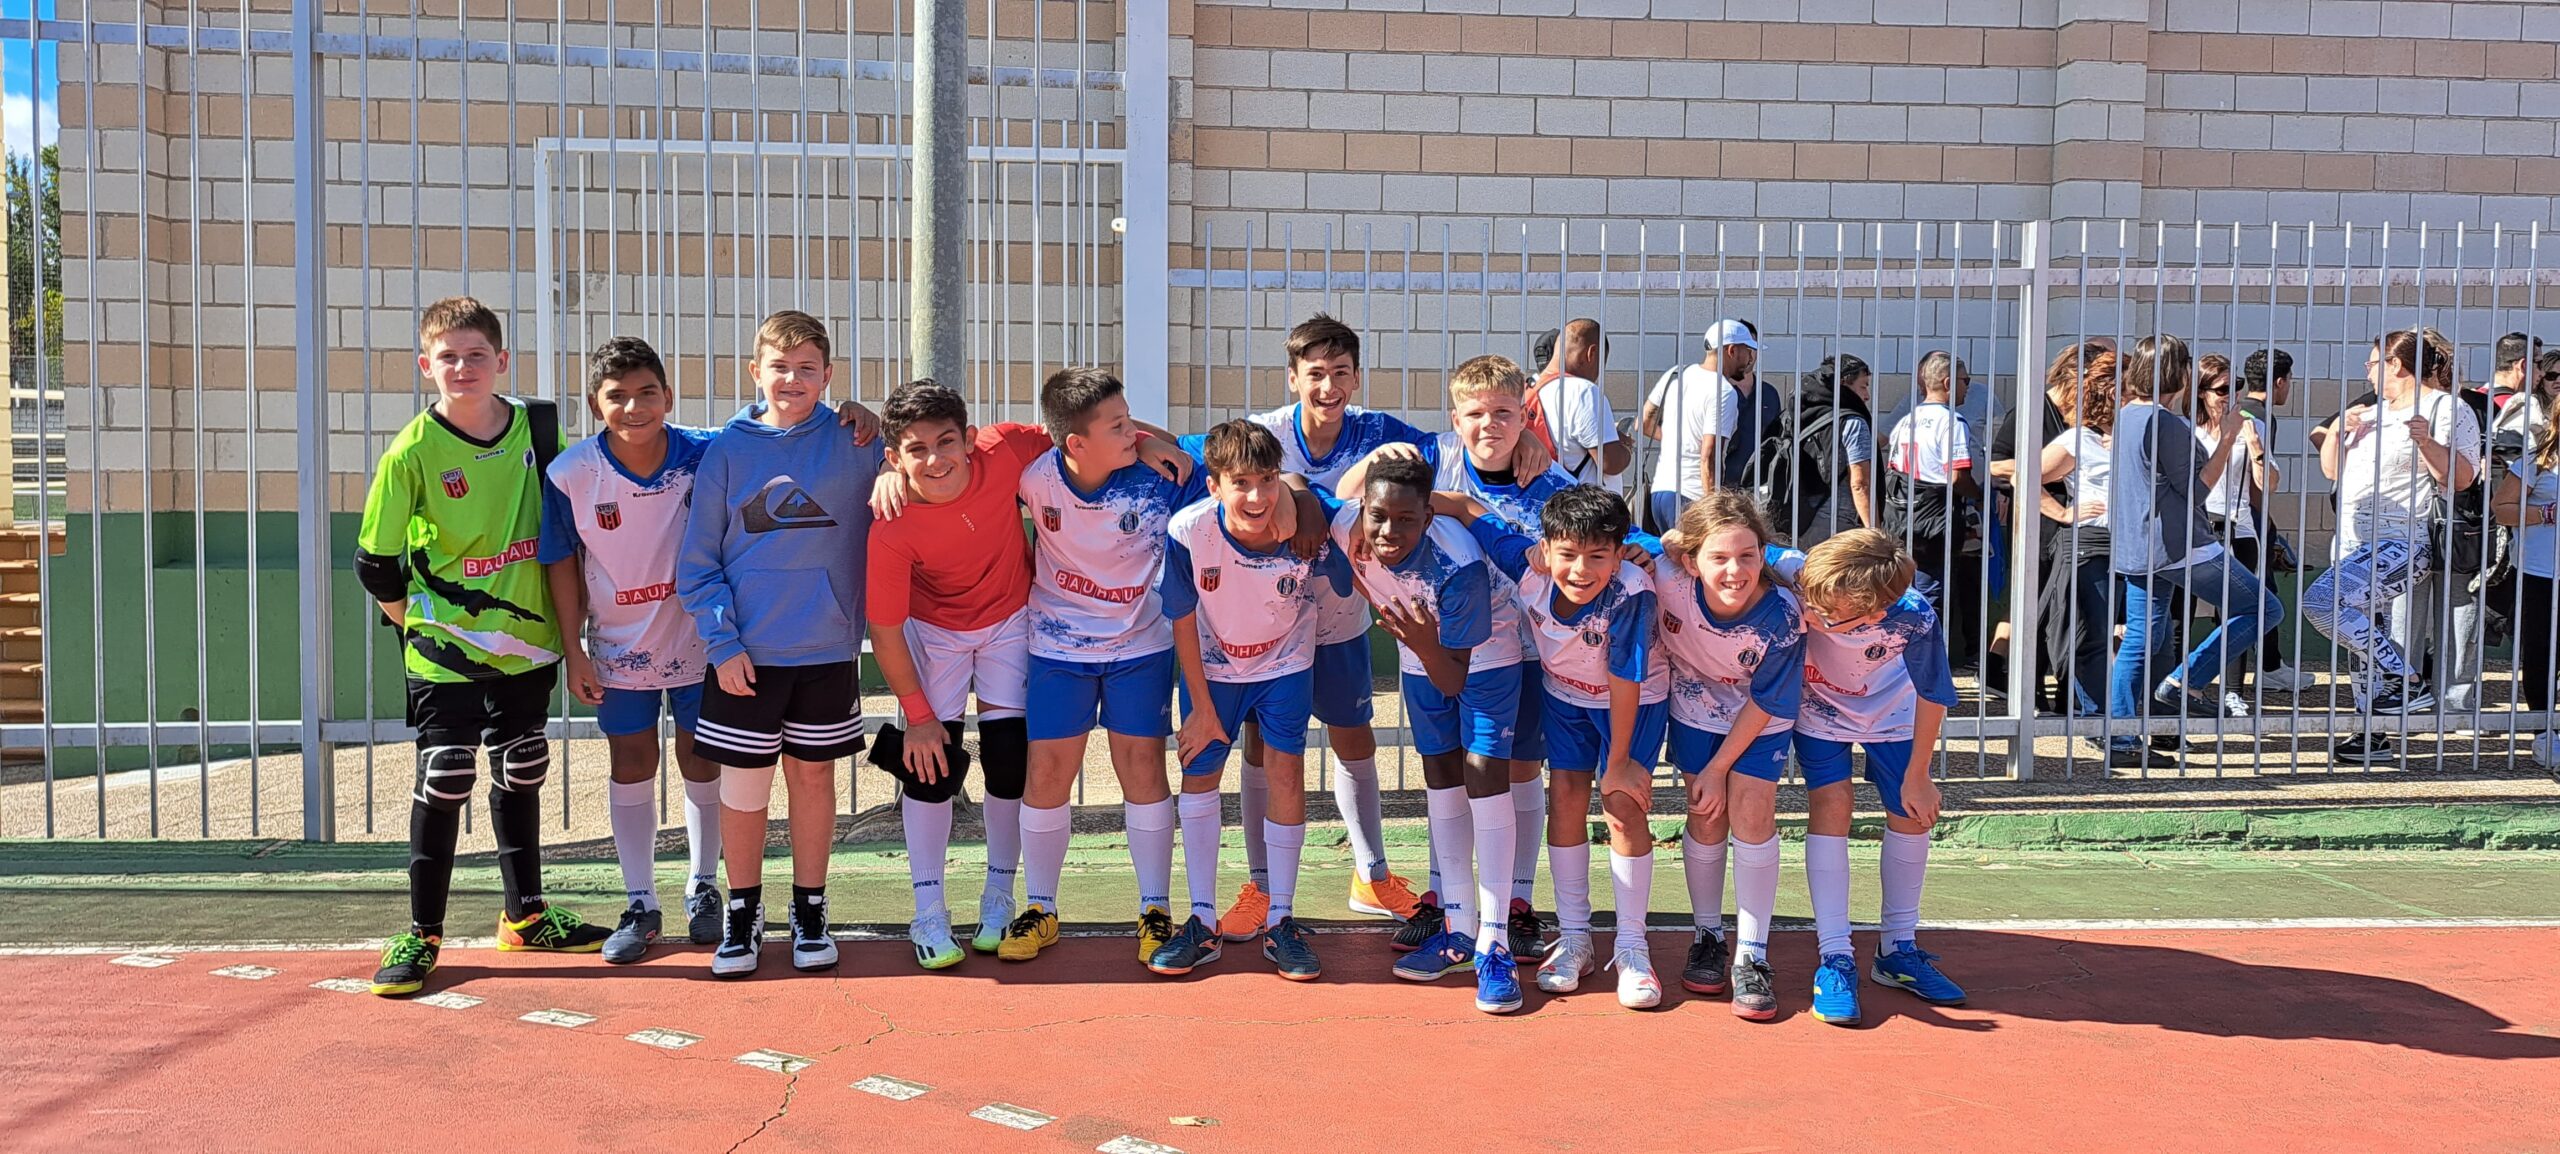 InterSala 10 Zaragoza (infantil masculino) 4-2 Utebo Fs – Jornada 1